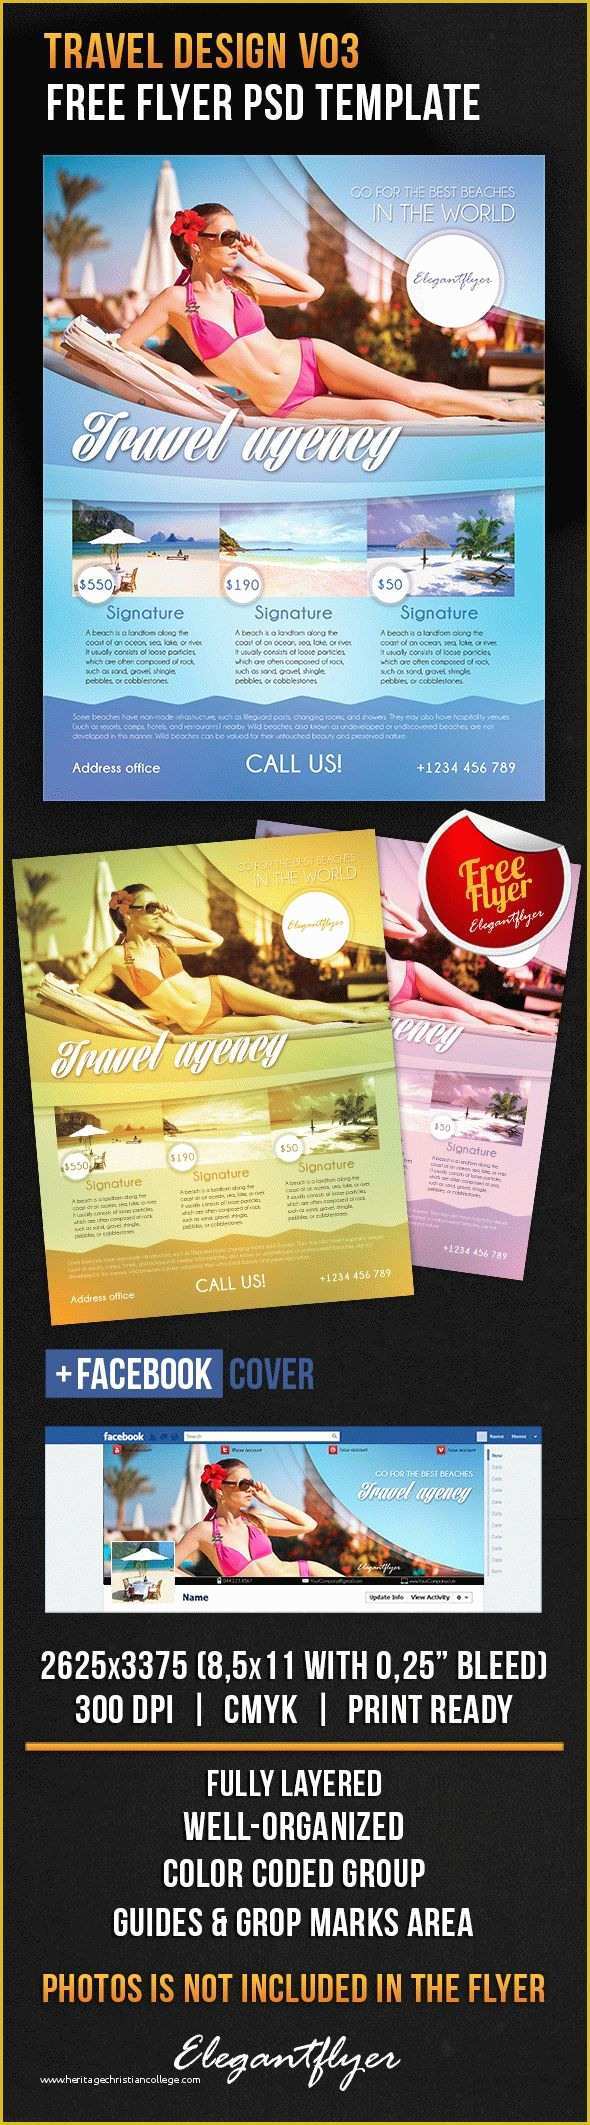 Travel Flyer Template Free Of Travel Design V03 – Free Flyer Psd Template – by Elegantflyer